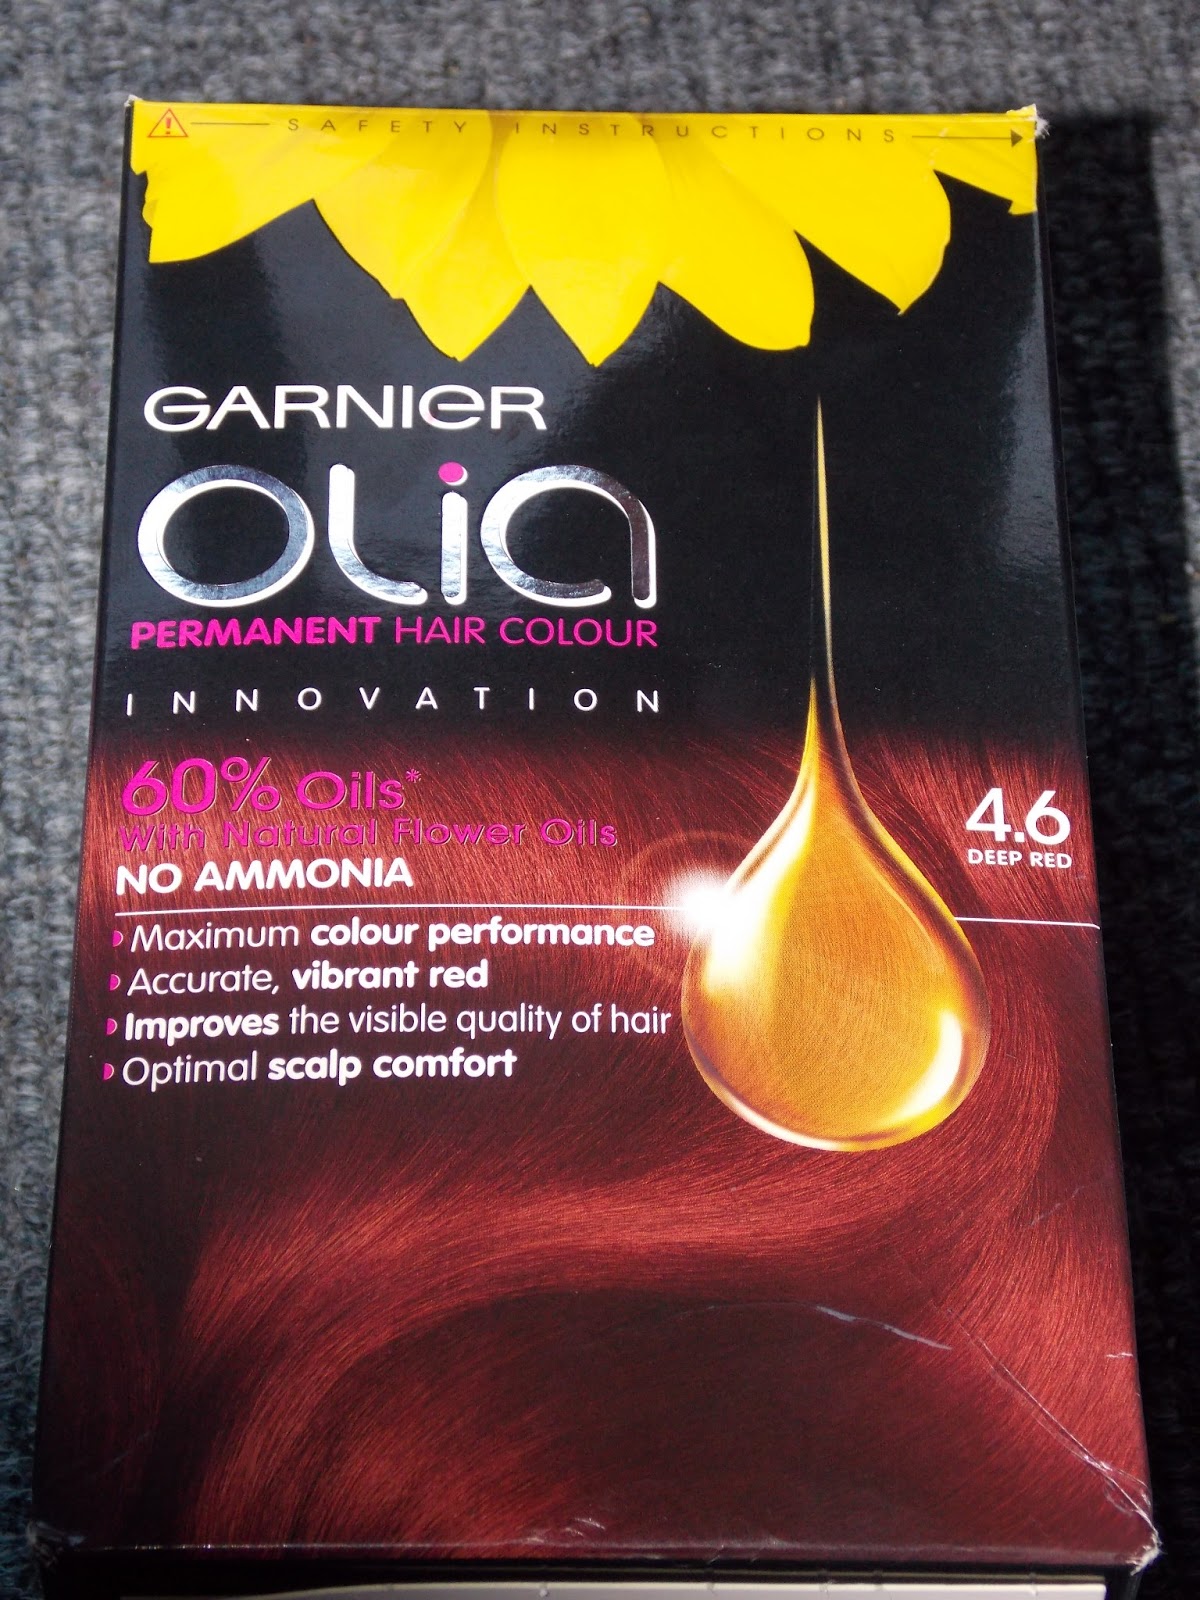 VidathingS: Review - Garnier Olia Permanent Hair Colour / Deep Red